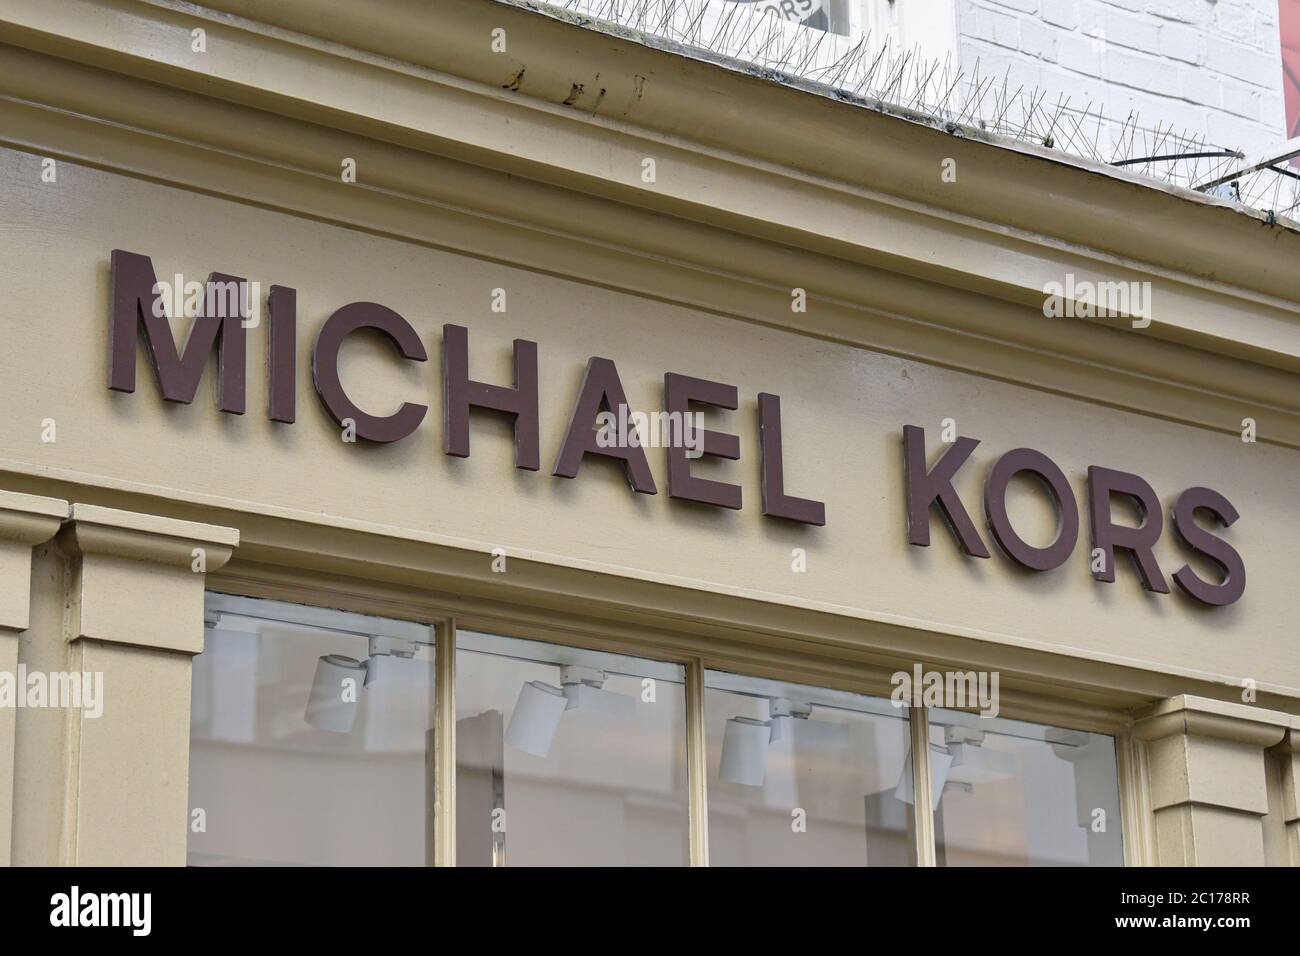 Michael Kors shop logo in Covent Garden Stock Photo - Alamy